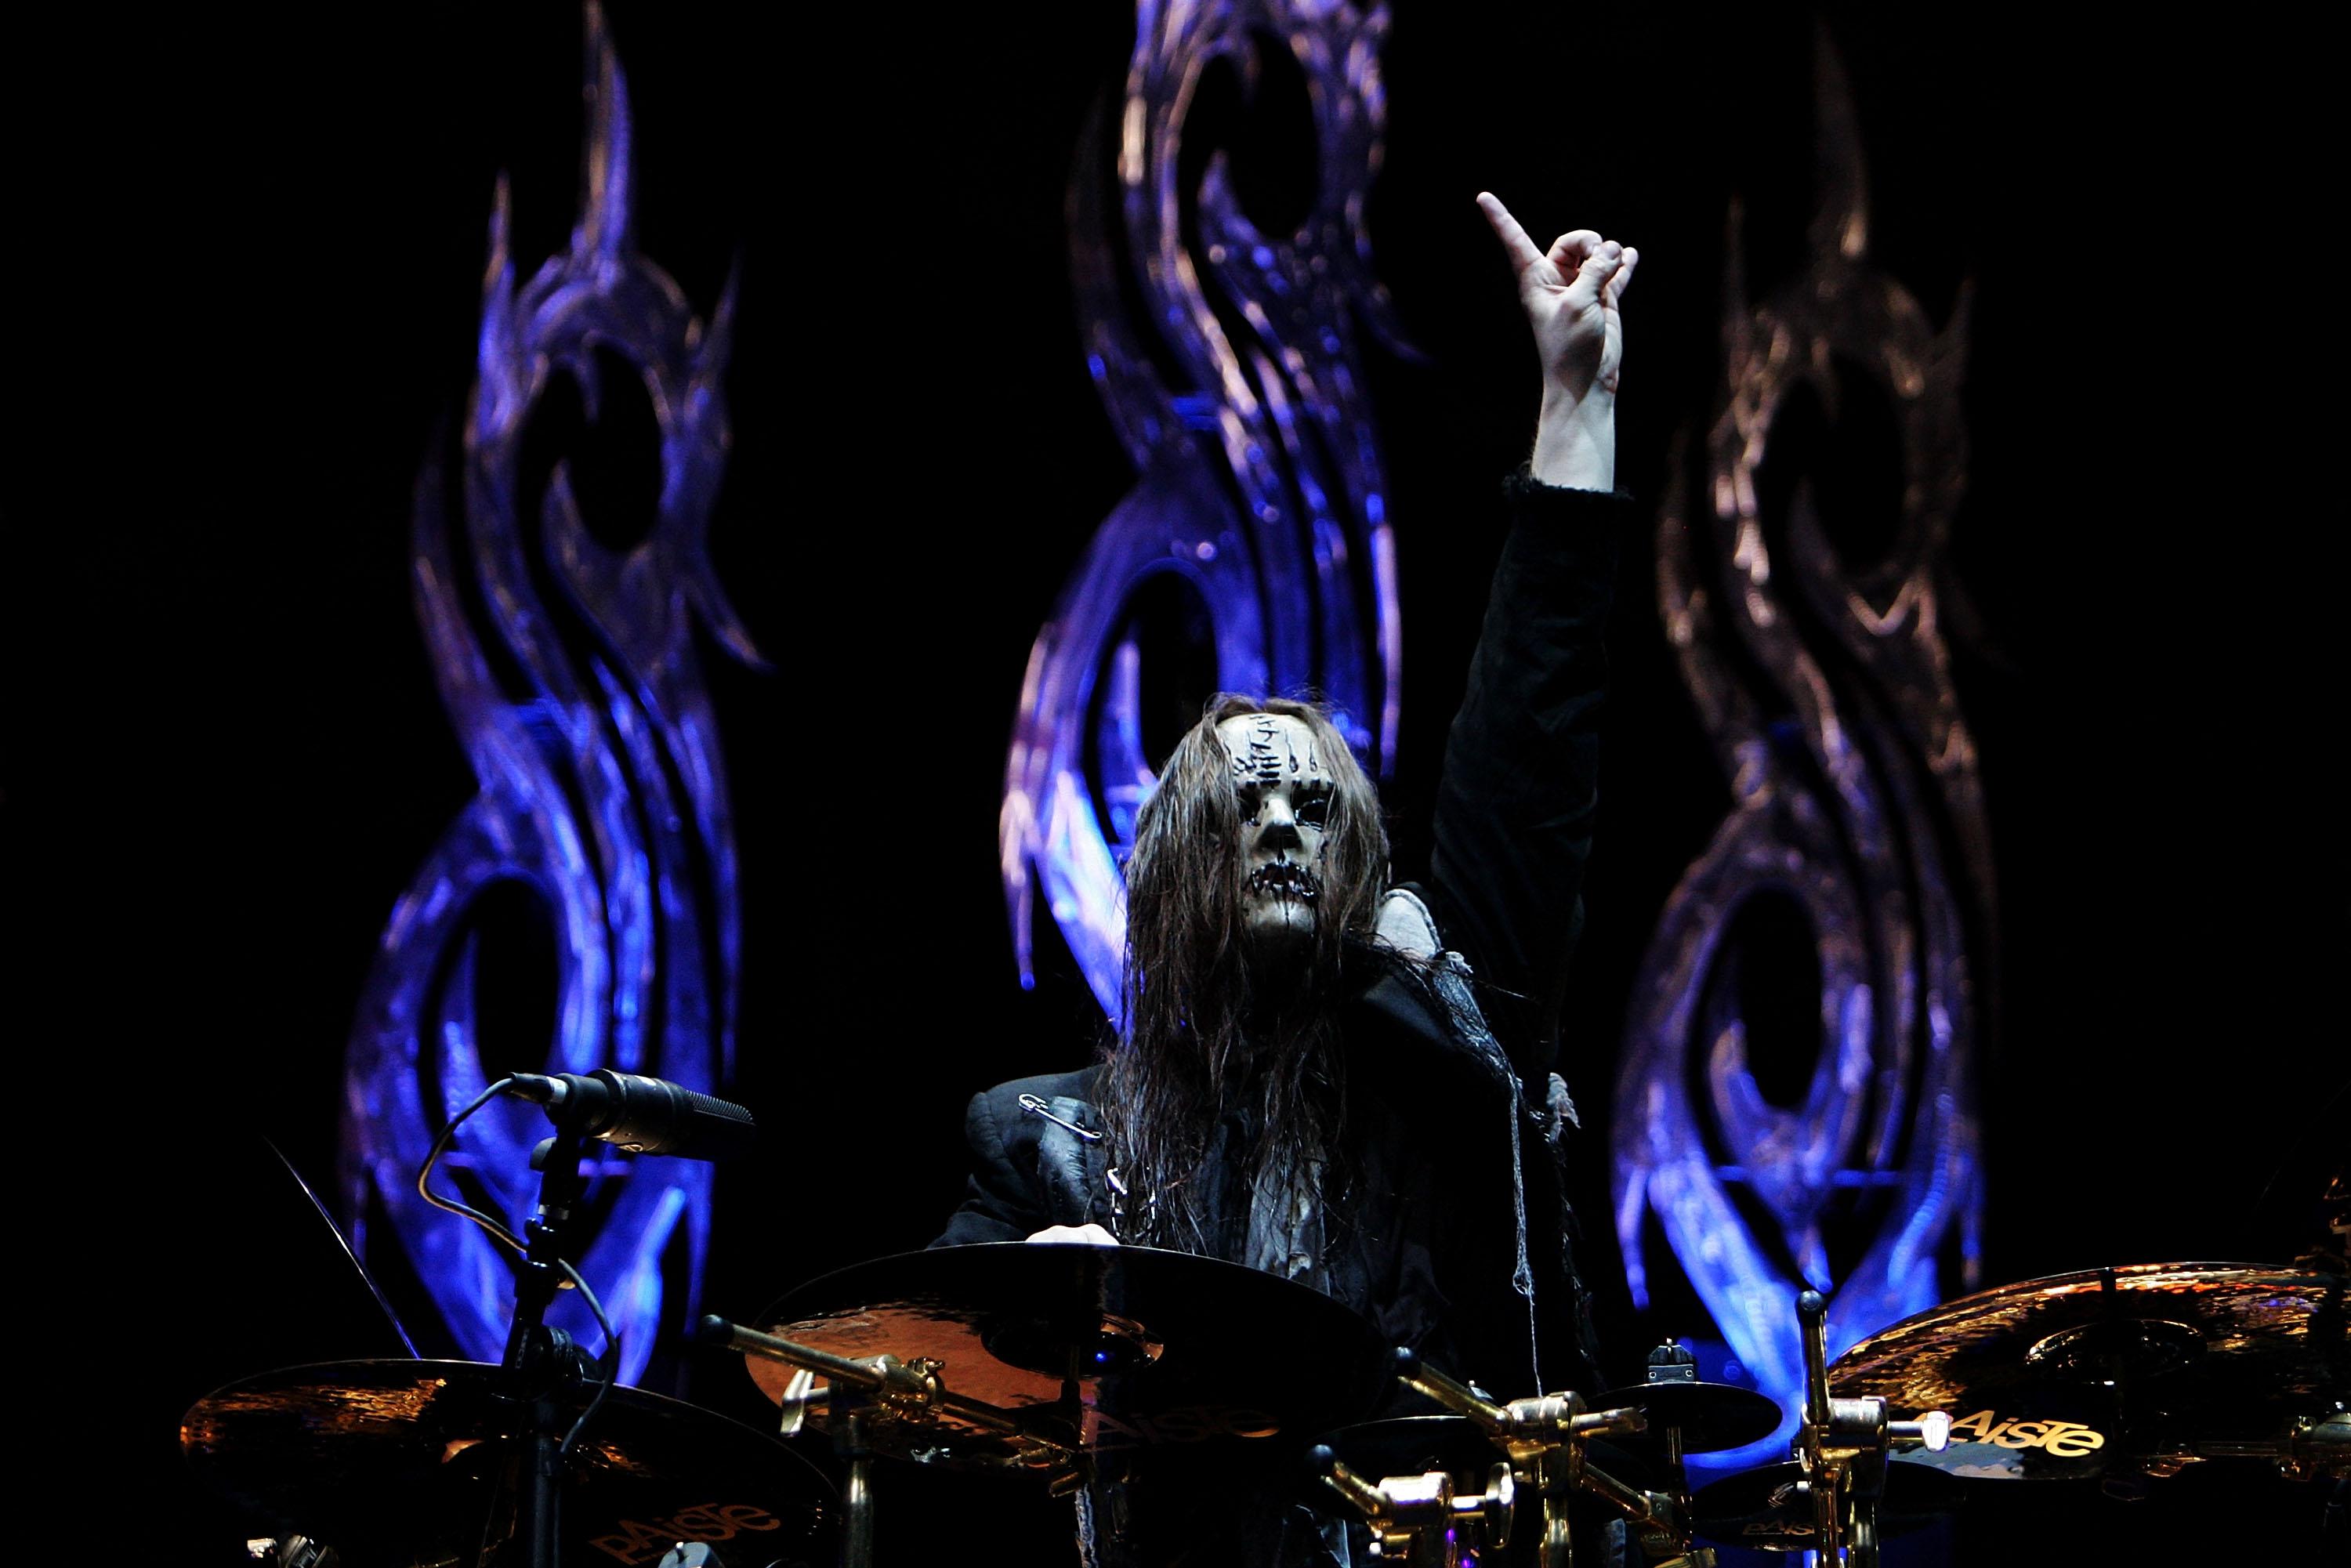 Joey Jordison of Slipknot